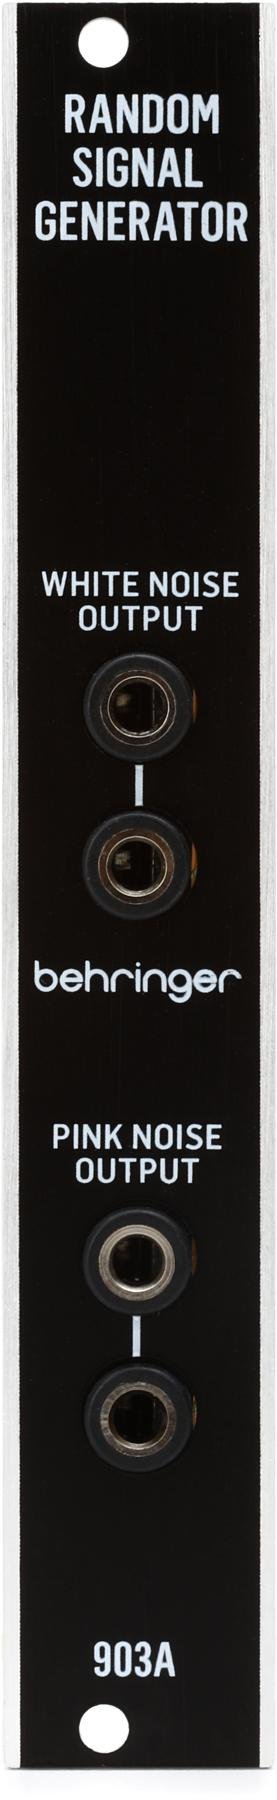 Behringer 903A Random Signal Generator Eurorack Module | Sweetwater